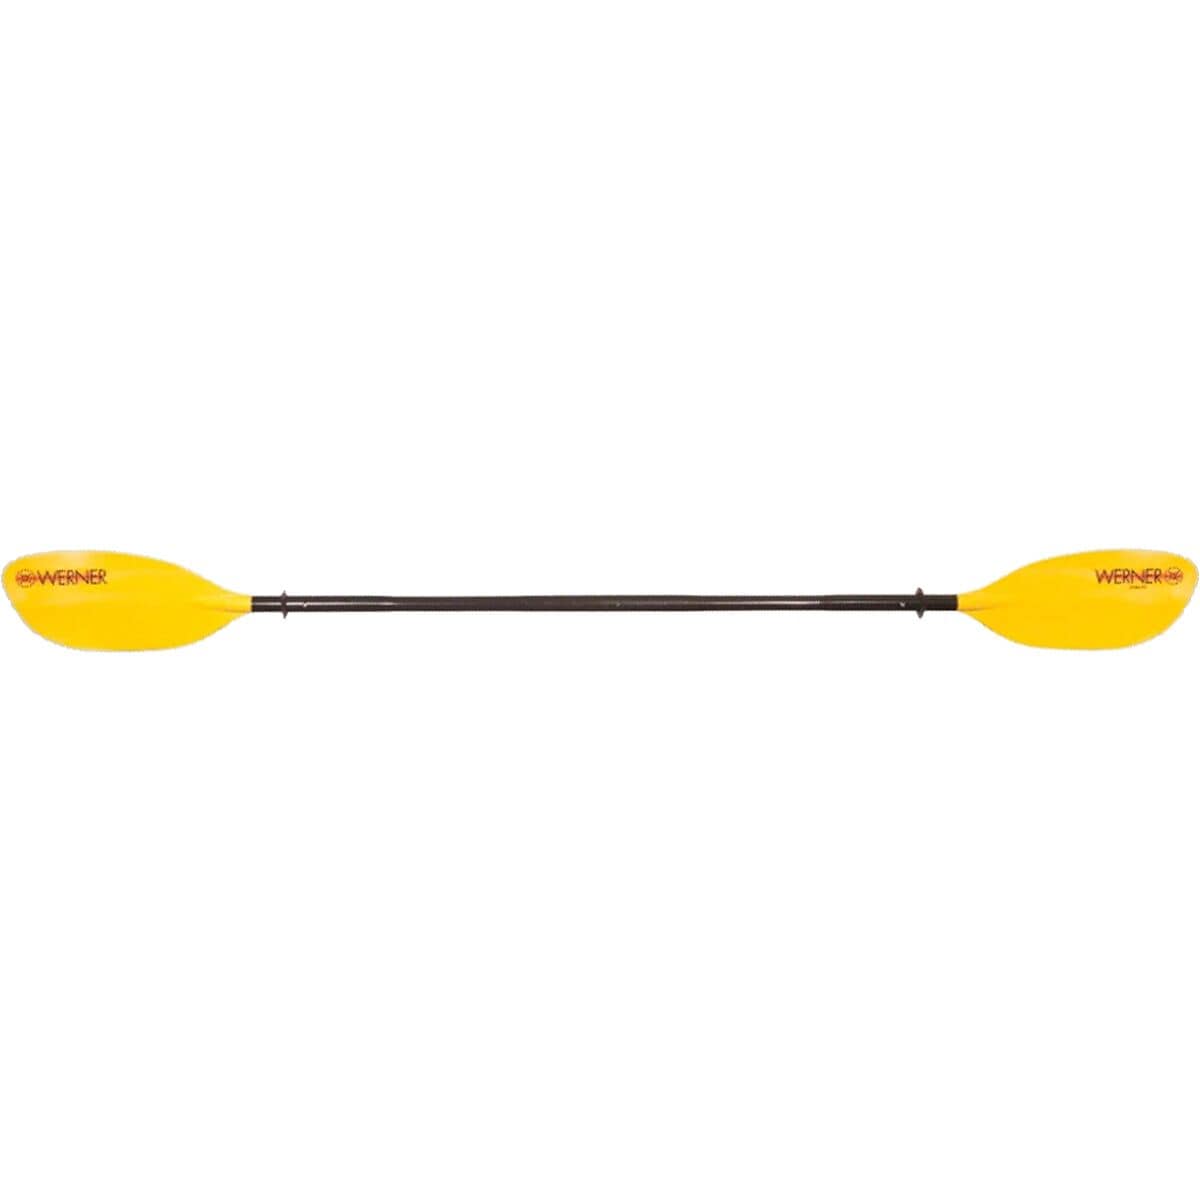 Werner Tybee FG 4-Piece Paddle - Straight Shaft